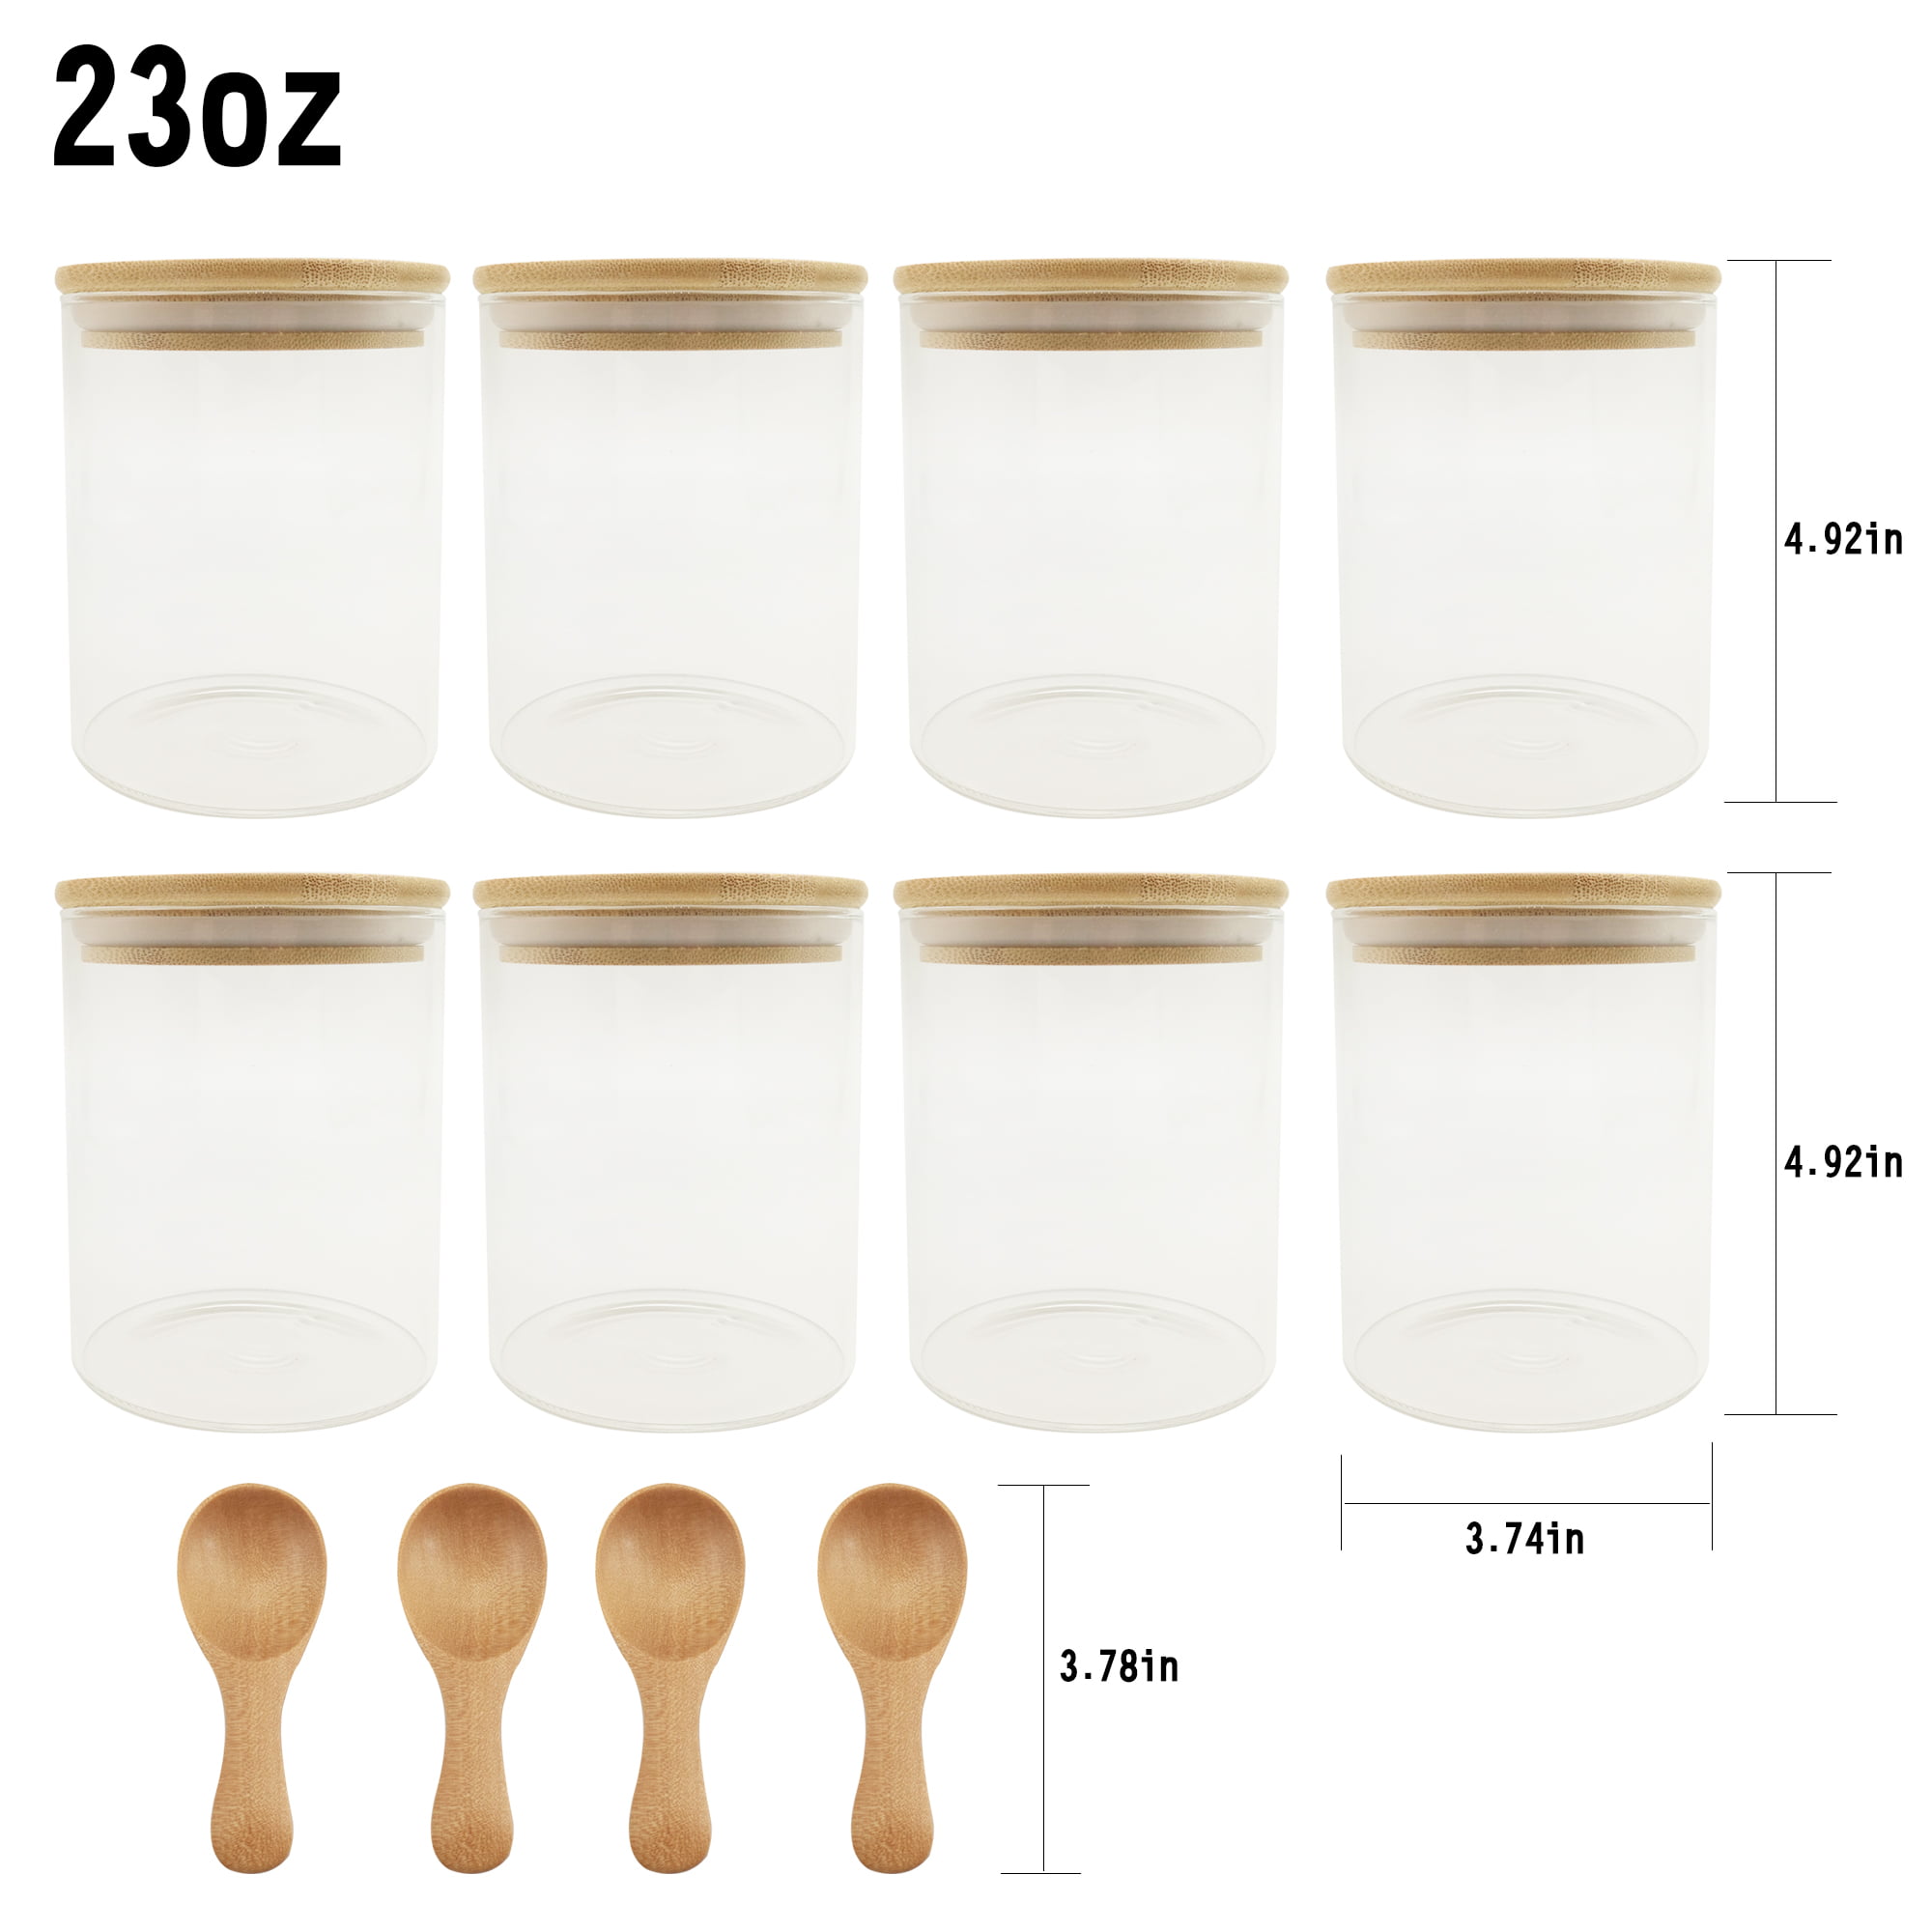 Jar-1/2 Cup shaker jar – AllSpice Culinarium